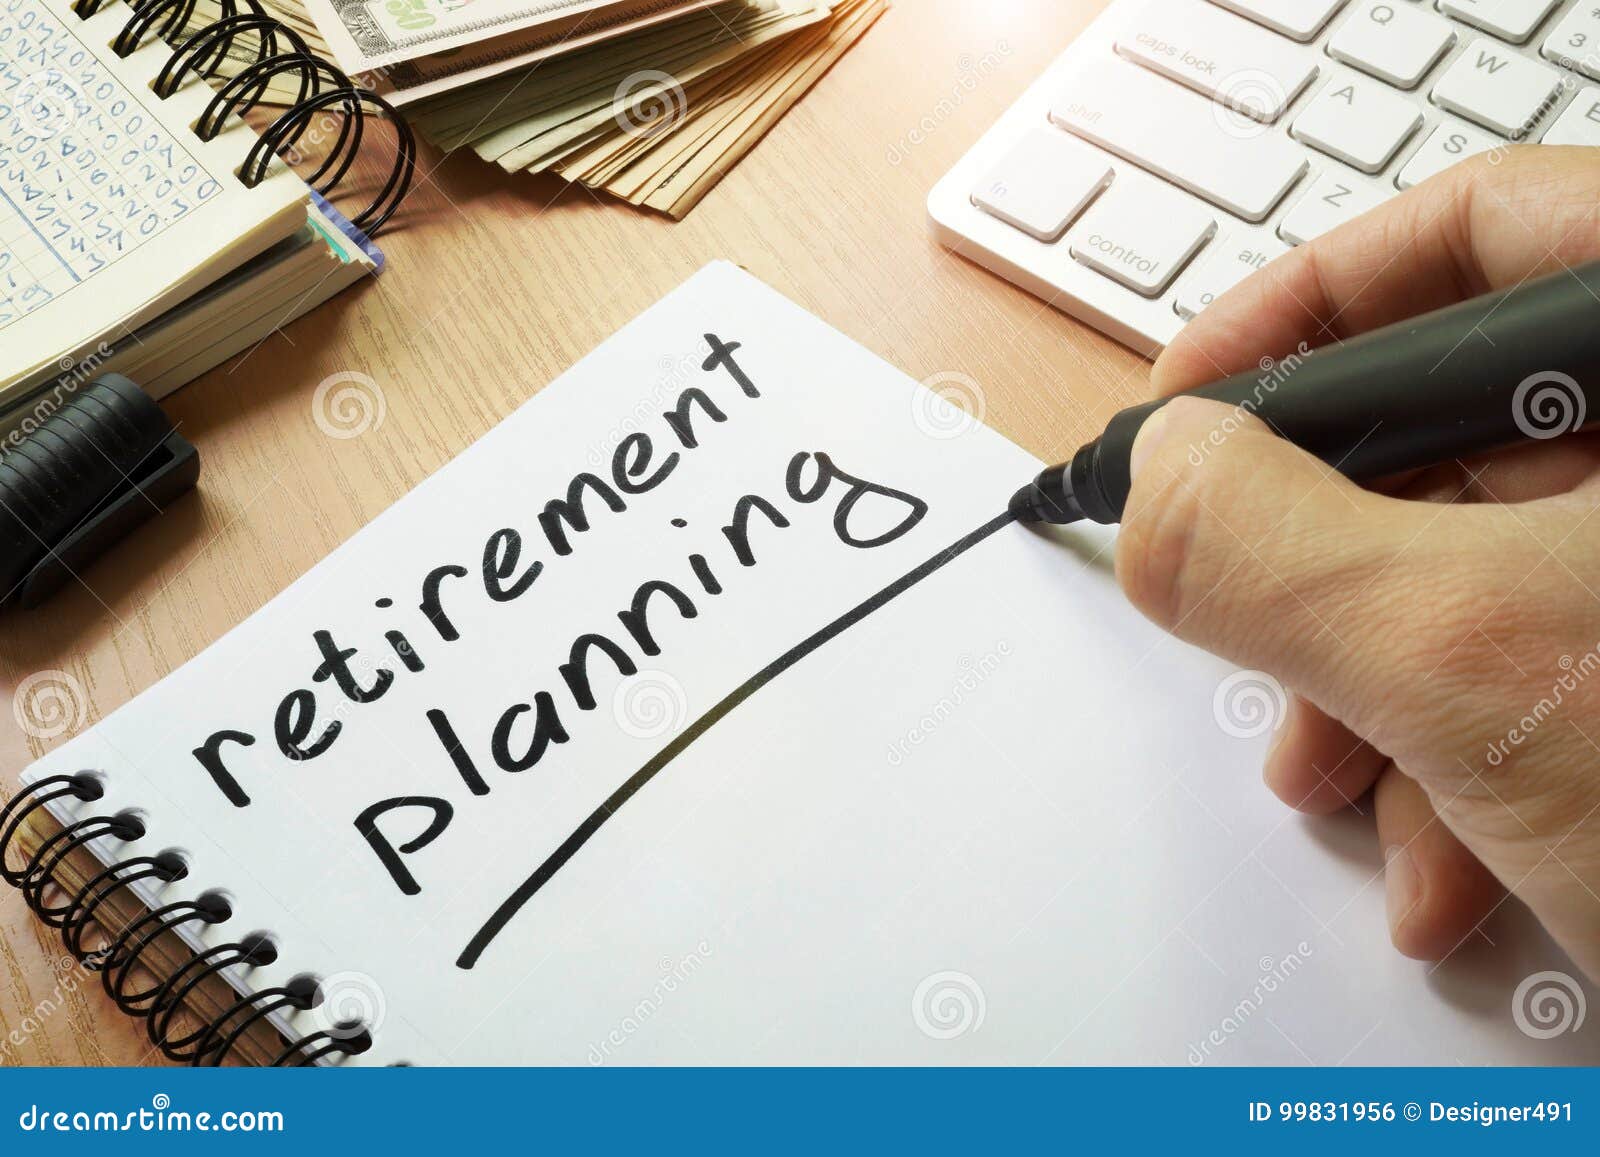 retirement planning.